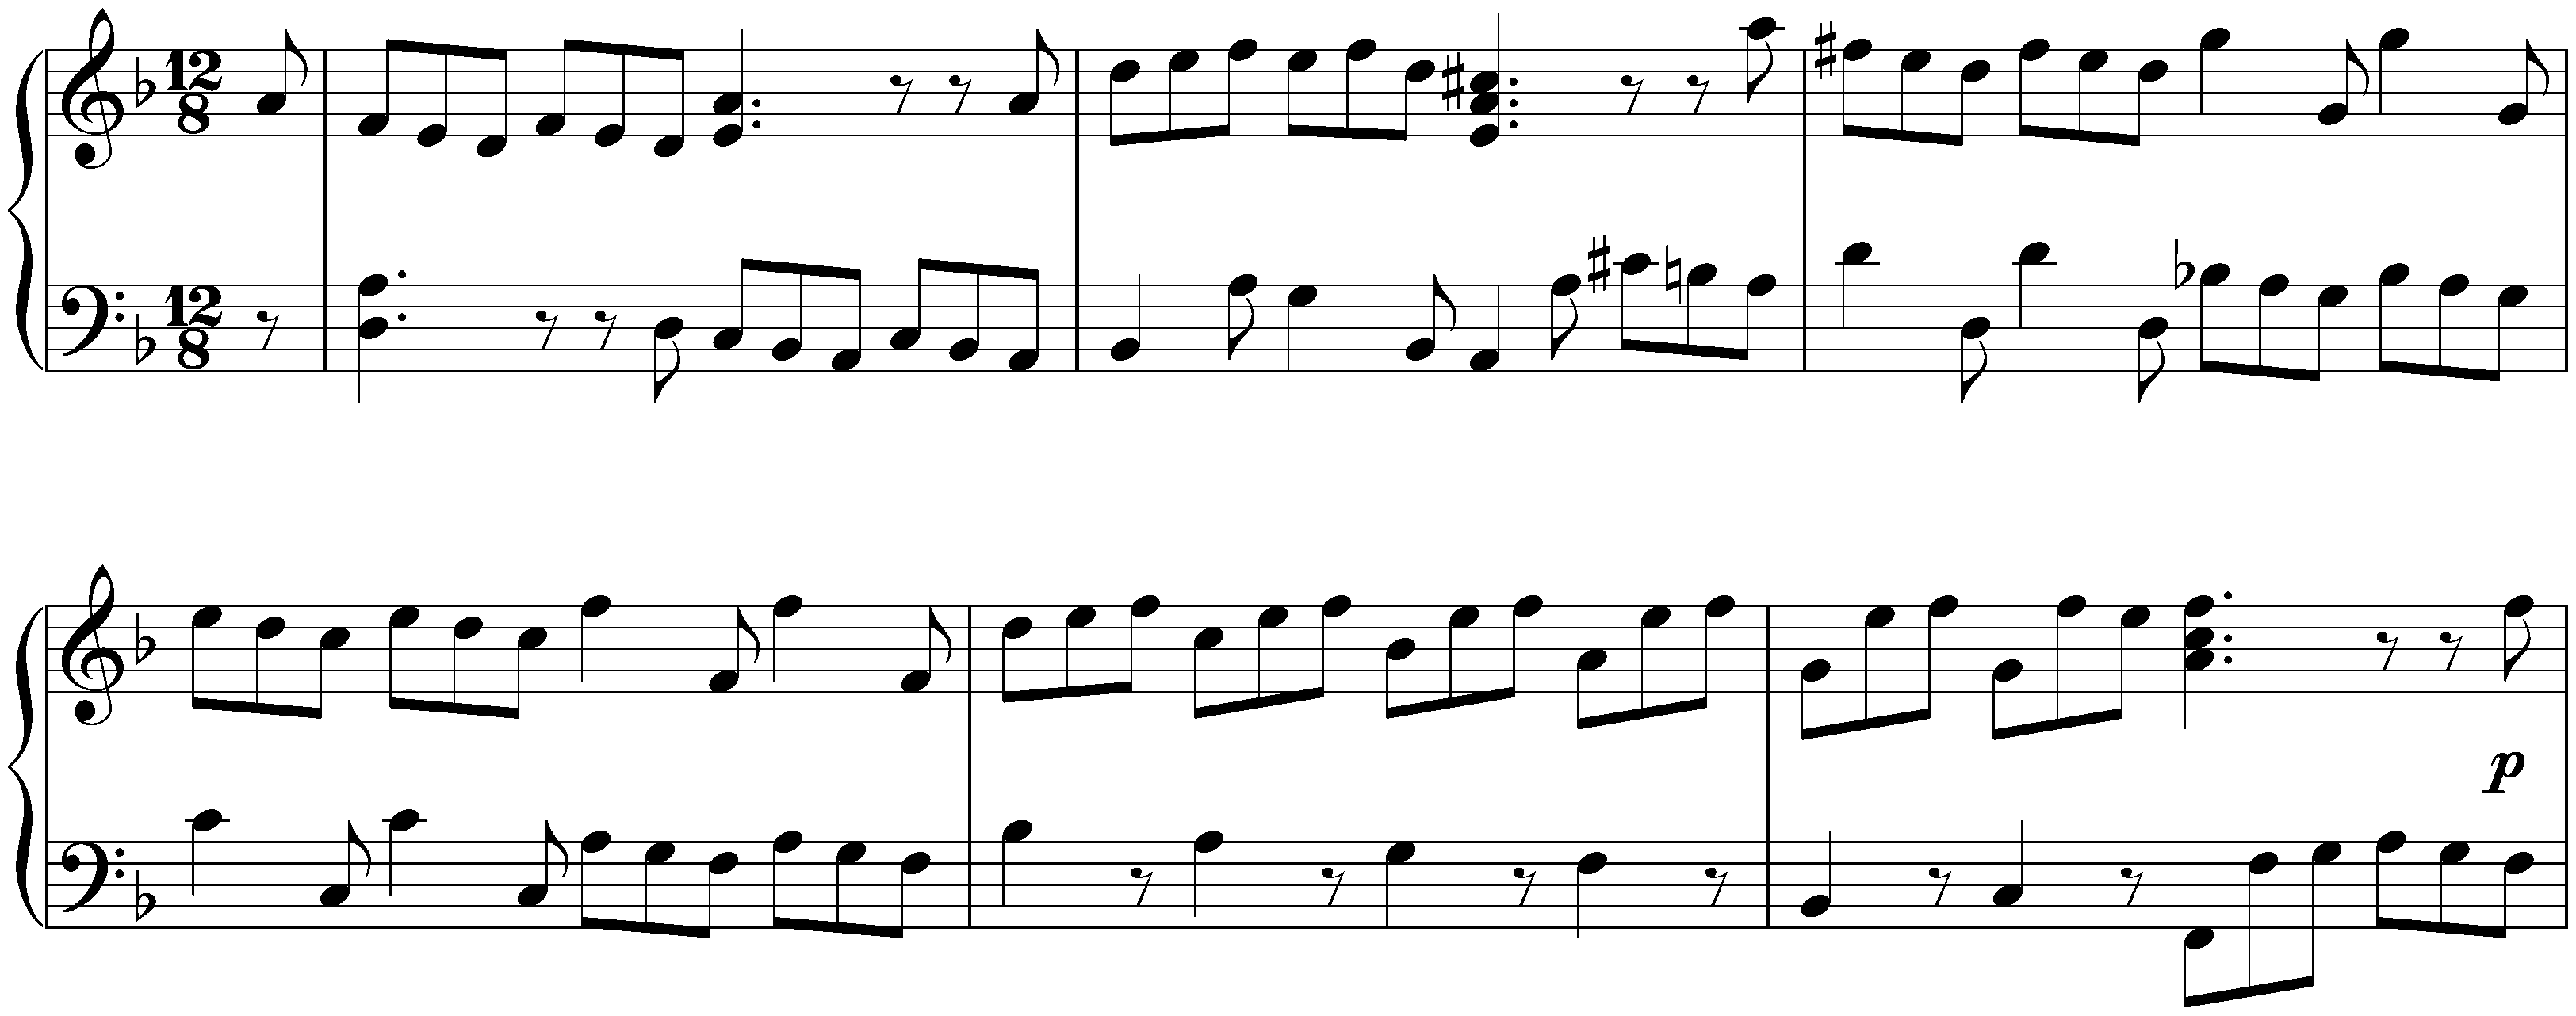 Sonatina in D minor, HWV 581